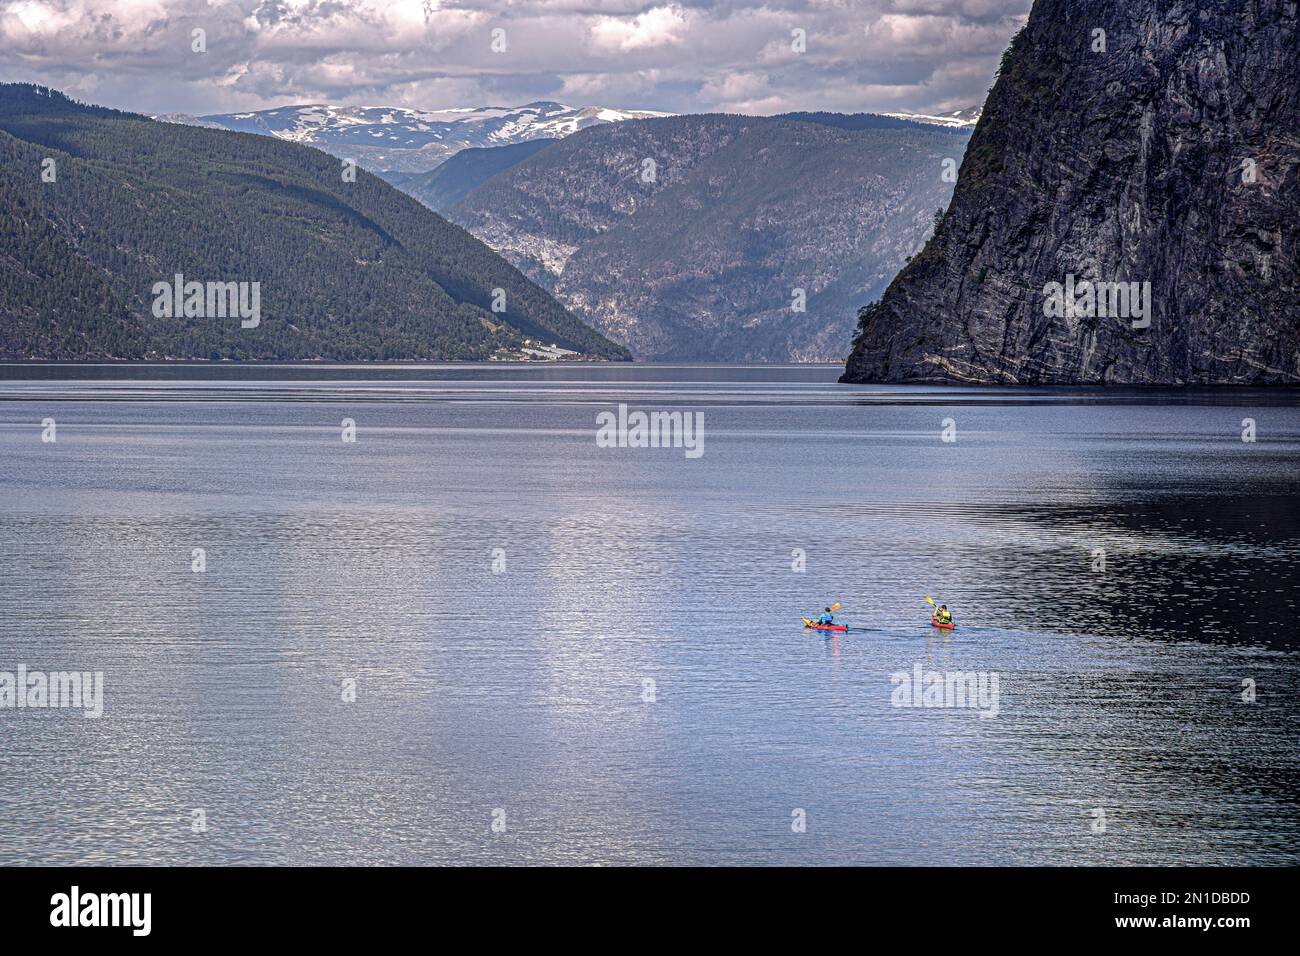 Zwei Kajak Fahrer paddeln auf dem Aurlandsfjord à Norwegen Banque D'Images